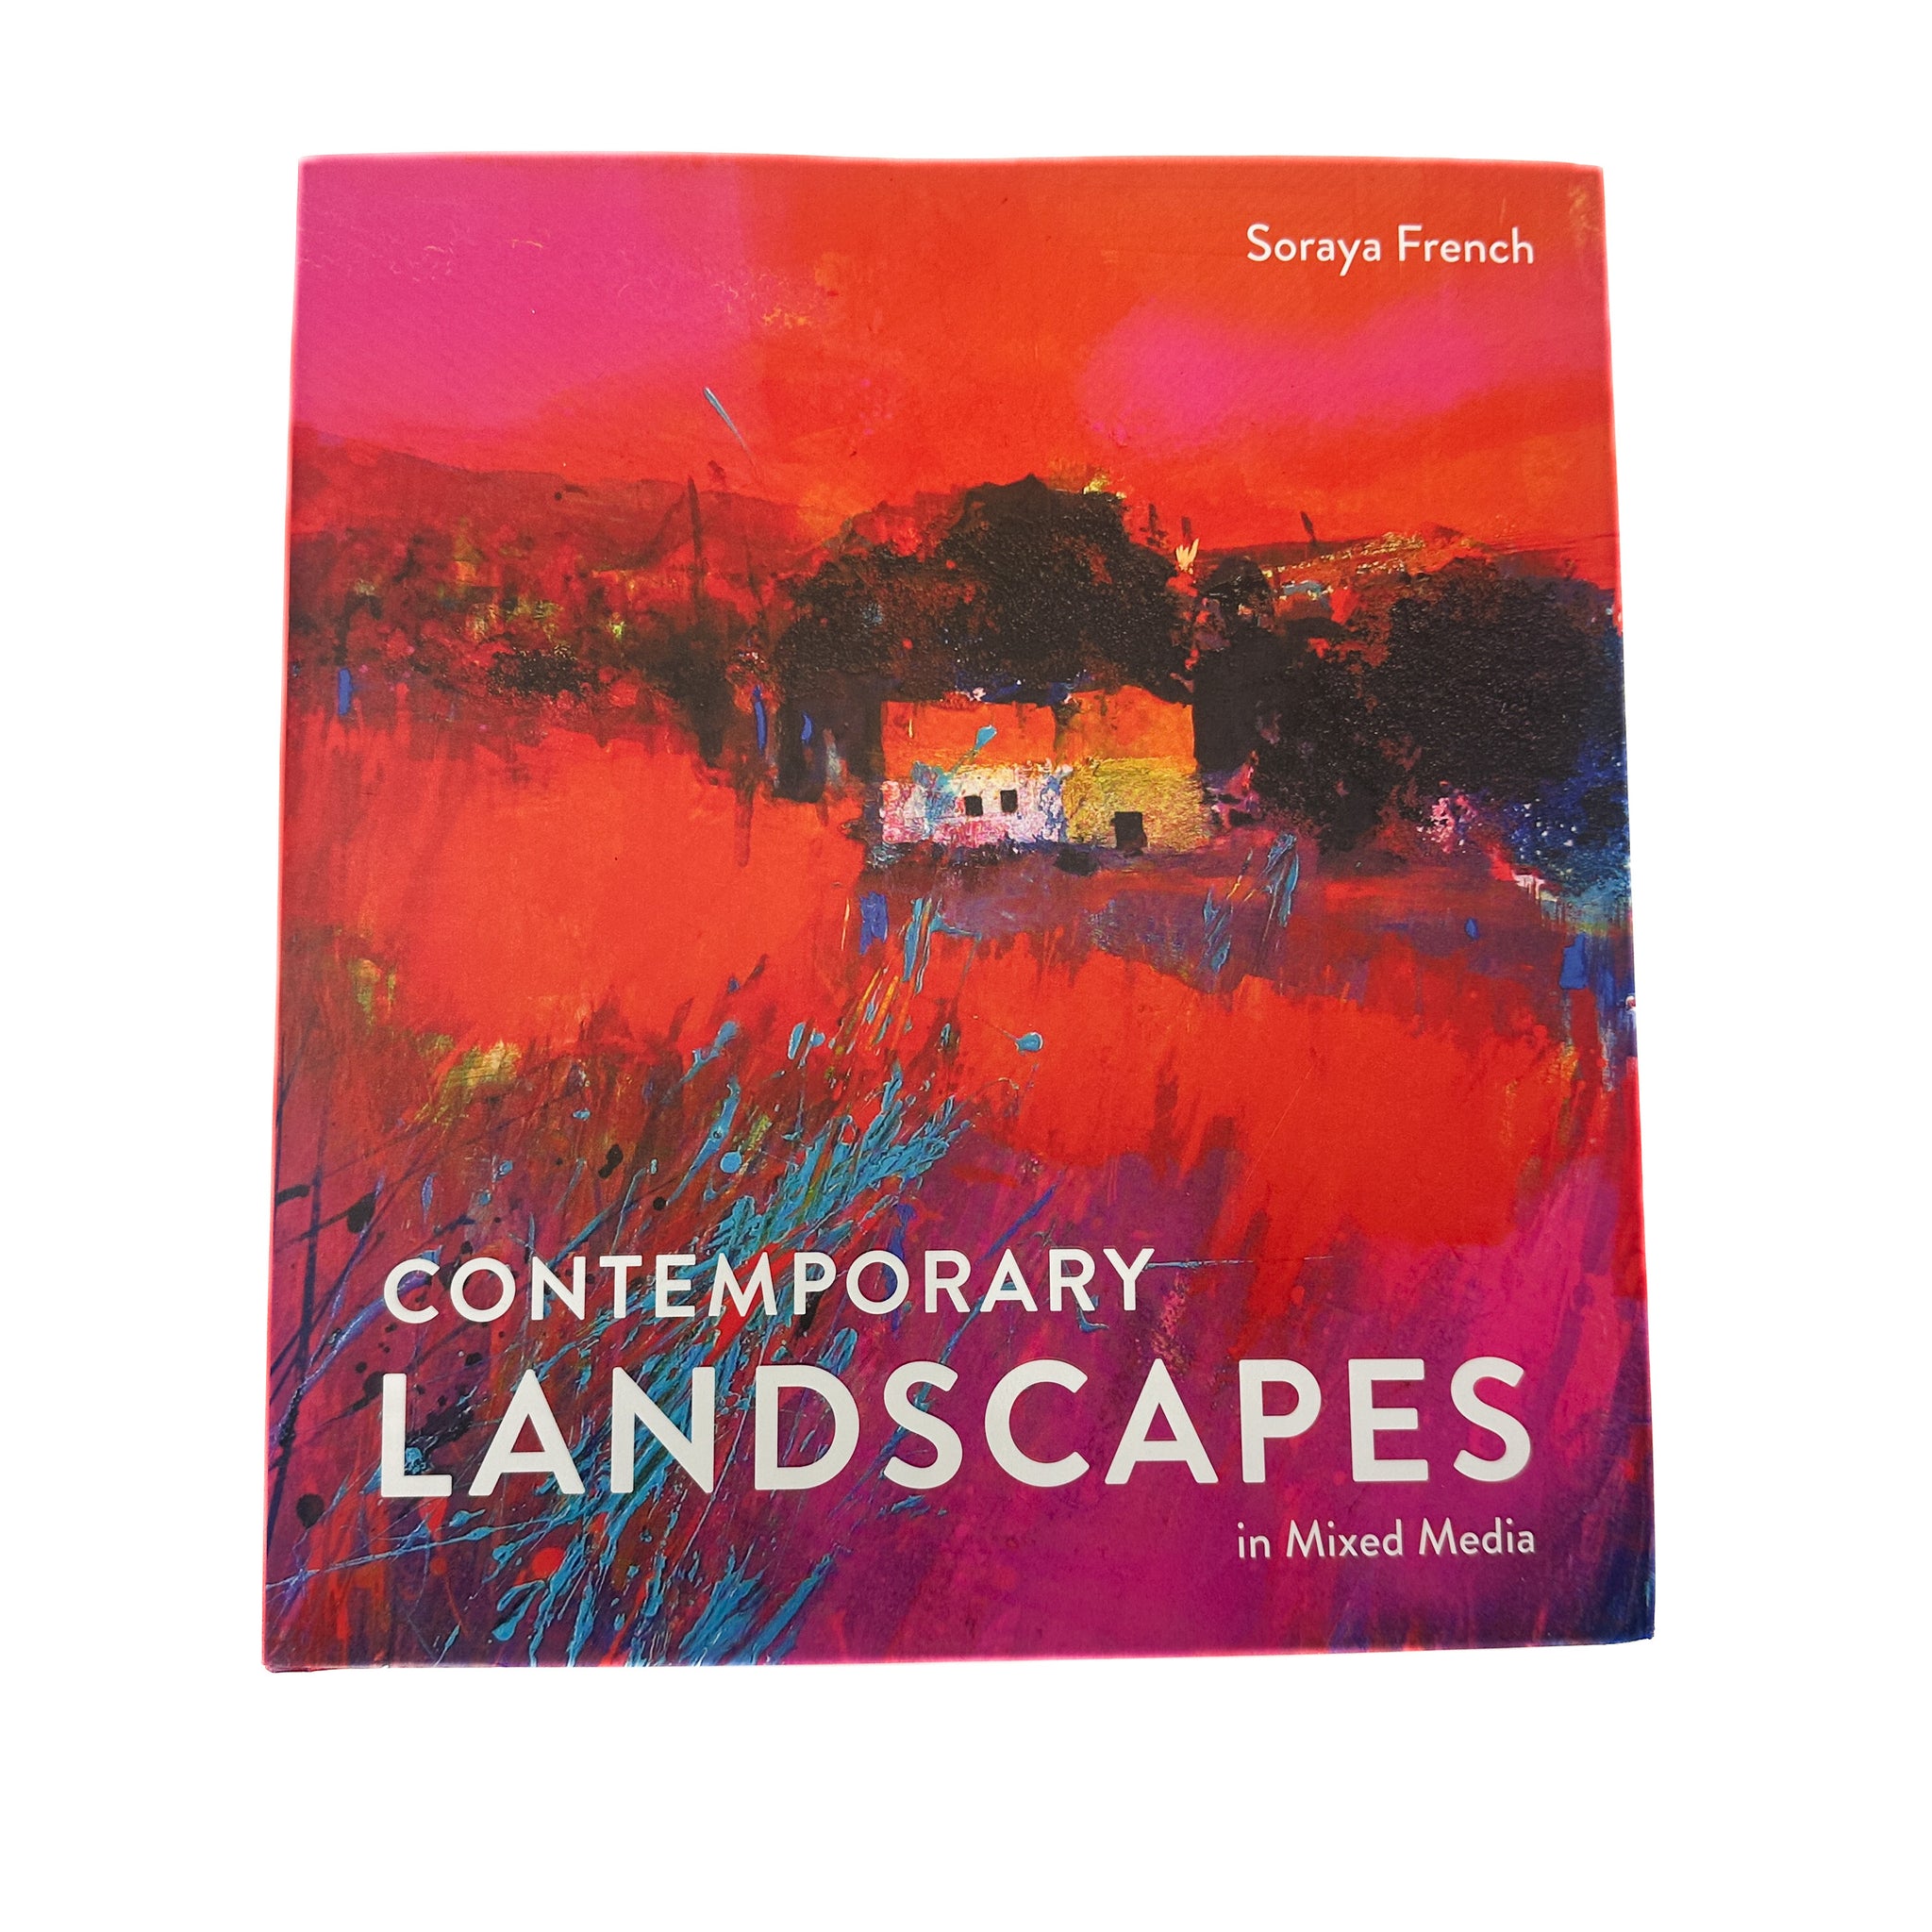 Contemporary Landscape in Mixed Media by Soraya French